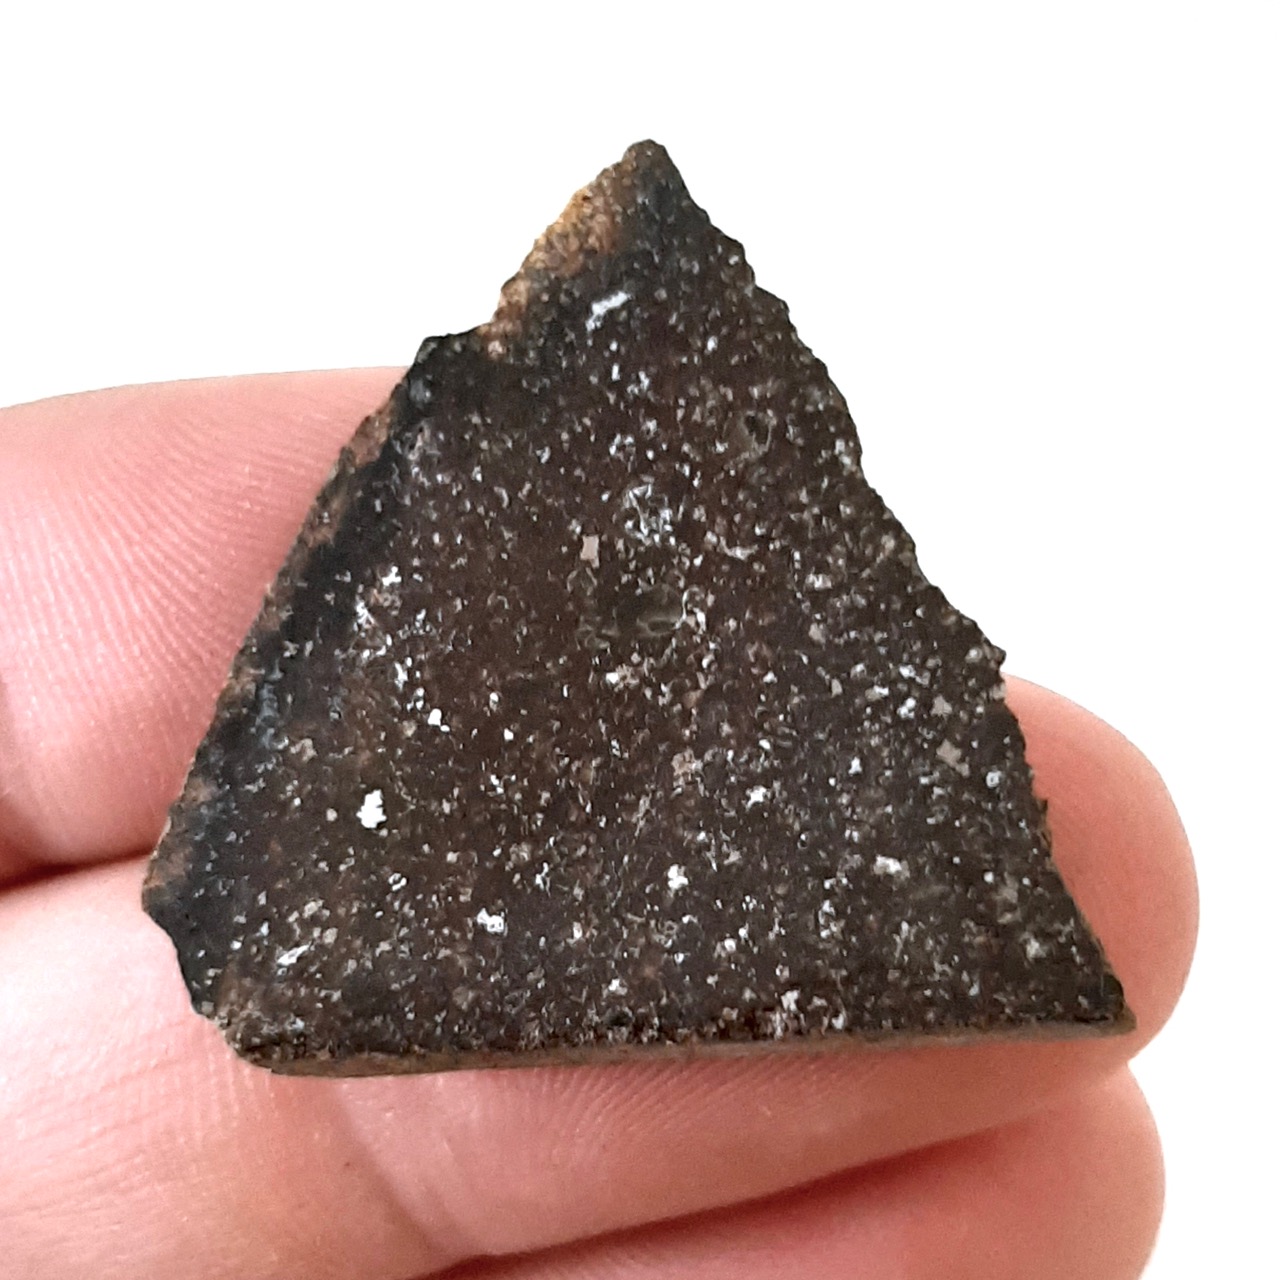 Souslovo meteorite. L4 chondrite. Possible fall in 1966.